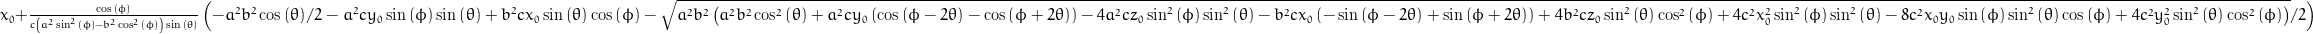 x_{0} + \frac{\cos{\left (\phi \right )}}{c \left(a^{2} \sin^{2}{\left (\phi \right )} - b^{2} \cos^{2}{\left (\phi \right )}\right) \sin{\left (\theta \right )}} \left(- \frac{a^{2} b^{2}}{2} \cos{\left (\theta \right )} - a^{2} c y_{0} \sin{\left (\phi \right )} \sin{\left (\theta \right )} + b^{2} c x_{0} \sin{\left (\theta \right )} \cos{\left (\phi \right )} - \frac{1}{2} \sqrt{a^{2} b^{2} \left(a^{2} b^{2} \cos^{2}{\left (\theta \right )} + a^{2} c y_{0} \left(\cos{\left (\phi - 2 \theta \right )} - \cos{\left (\phi + 2 \theta \right )}\right) - 4 a^{2} c z_{0} \sin^{2}{\left (\phi \right )} \sin^{2}{\left (\theta \right )} - b^{2} c x_{0} \left(- \sin{\left (\phi - 2 \theta \right )} + \sin{\left (\phi + 2 \theta \right )}\right) + 4 b^{2} c z_{0} \sin^{2}{\left (\theta \right )} \cos^{2}{\left (\phi \right )} + 4 c^{2} x_{0}^{2} \sin^{2}{\left (\phi \right )} \sin^{2}{\left (\theta \right )} - 8 c^{2} x_{0} y_{0} \sin{\left (\phi \right )} \sin^{2}{\left (\theta \right )} \cos{\left (\phi \right )} + 4 c^{2} y_{0}^{2} \sin^{2}{\left (\theta \right )} \cos^{2}{\left (\phi \right )}\right)}\right)